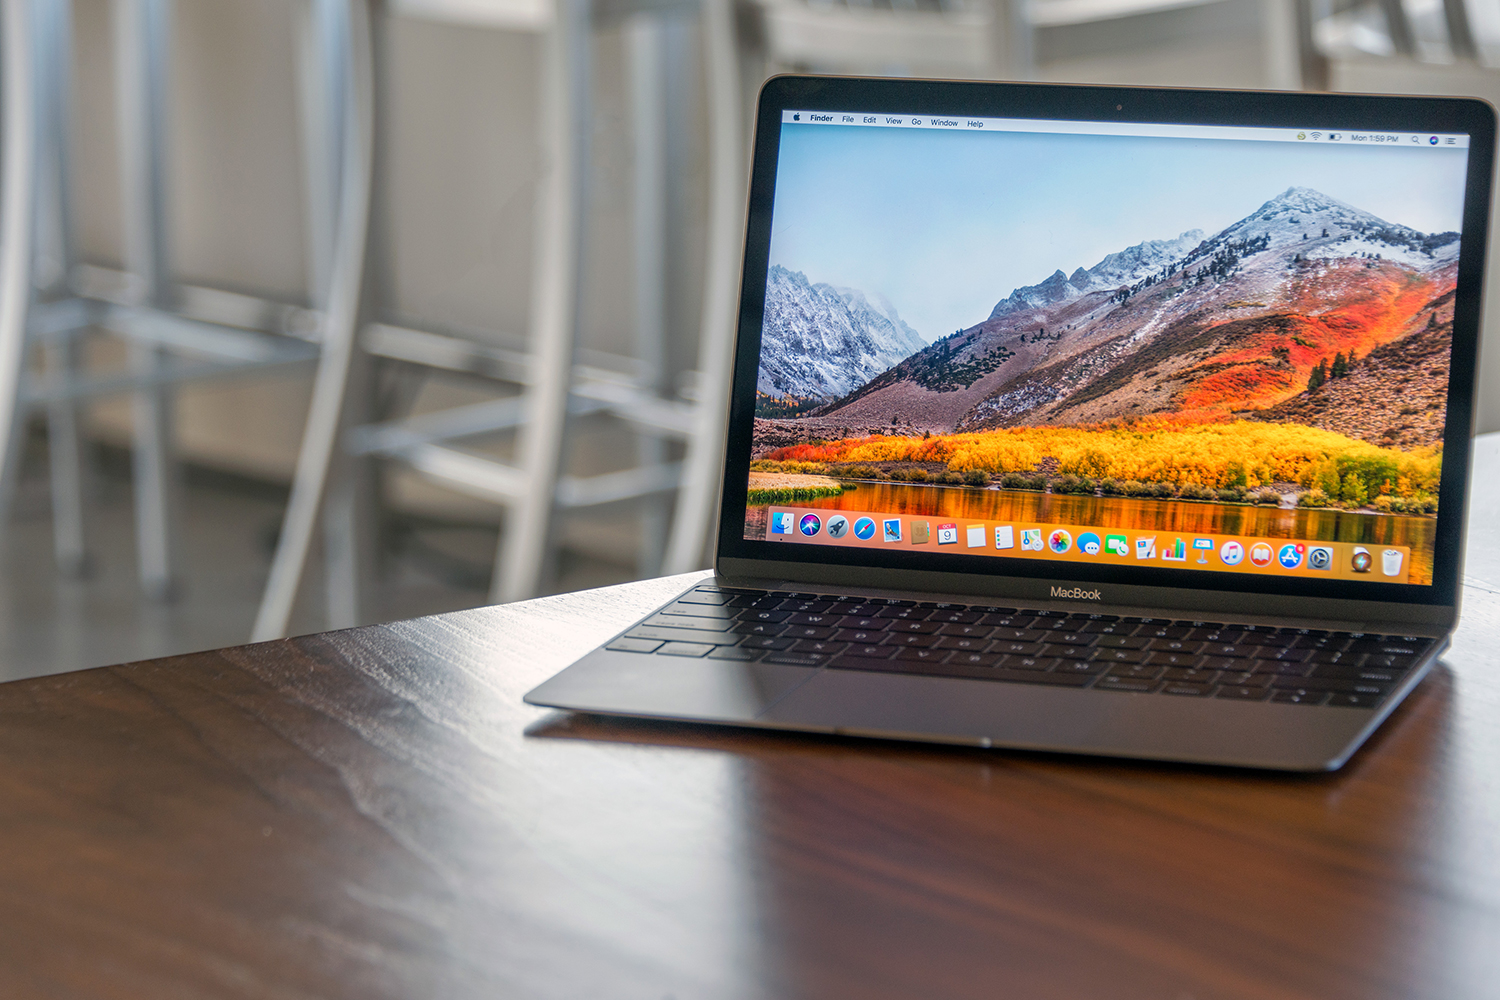 Apple MacBook 12-inch Review: Just Buy The MacBook Air